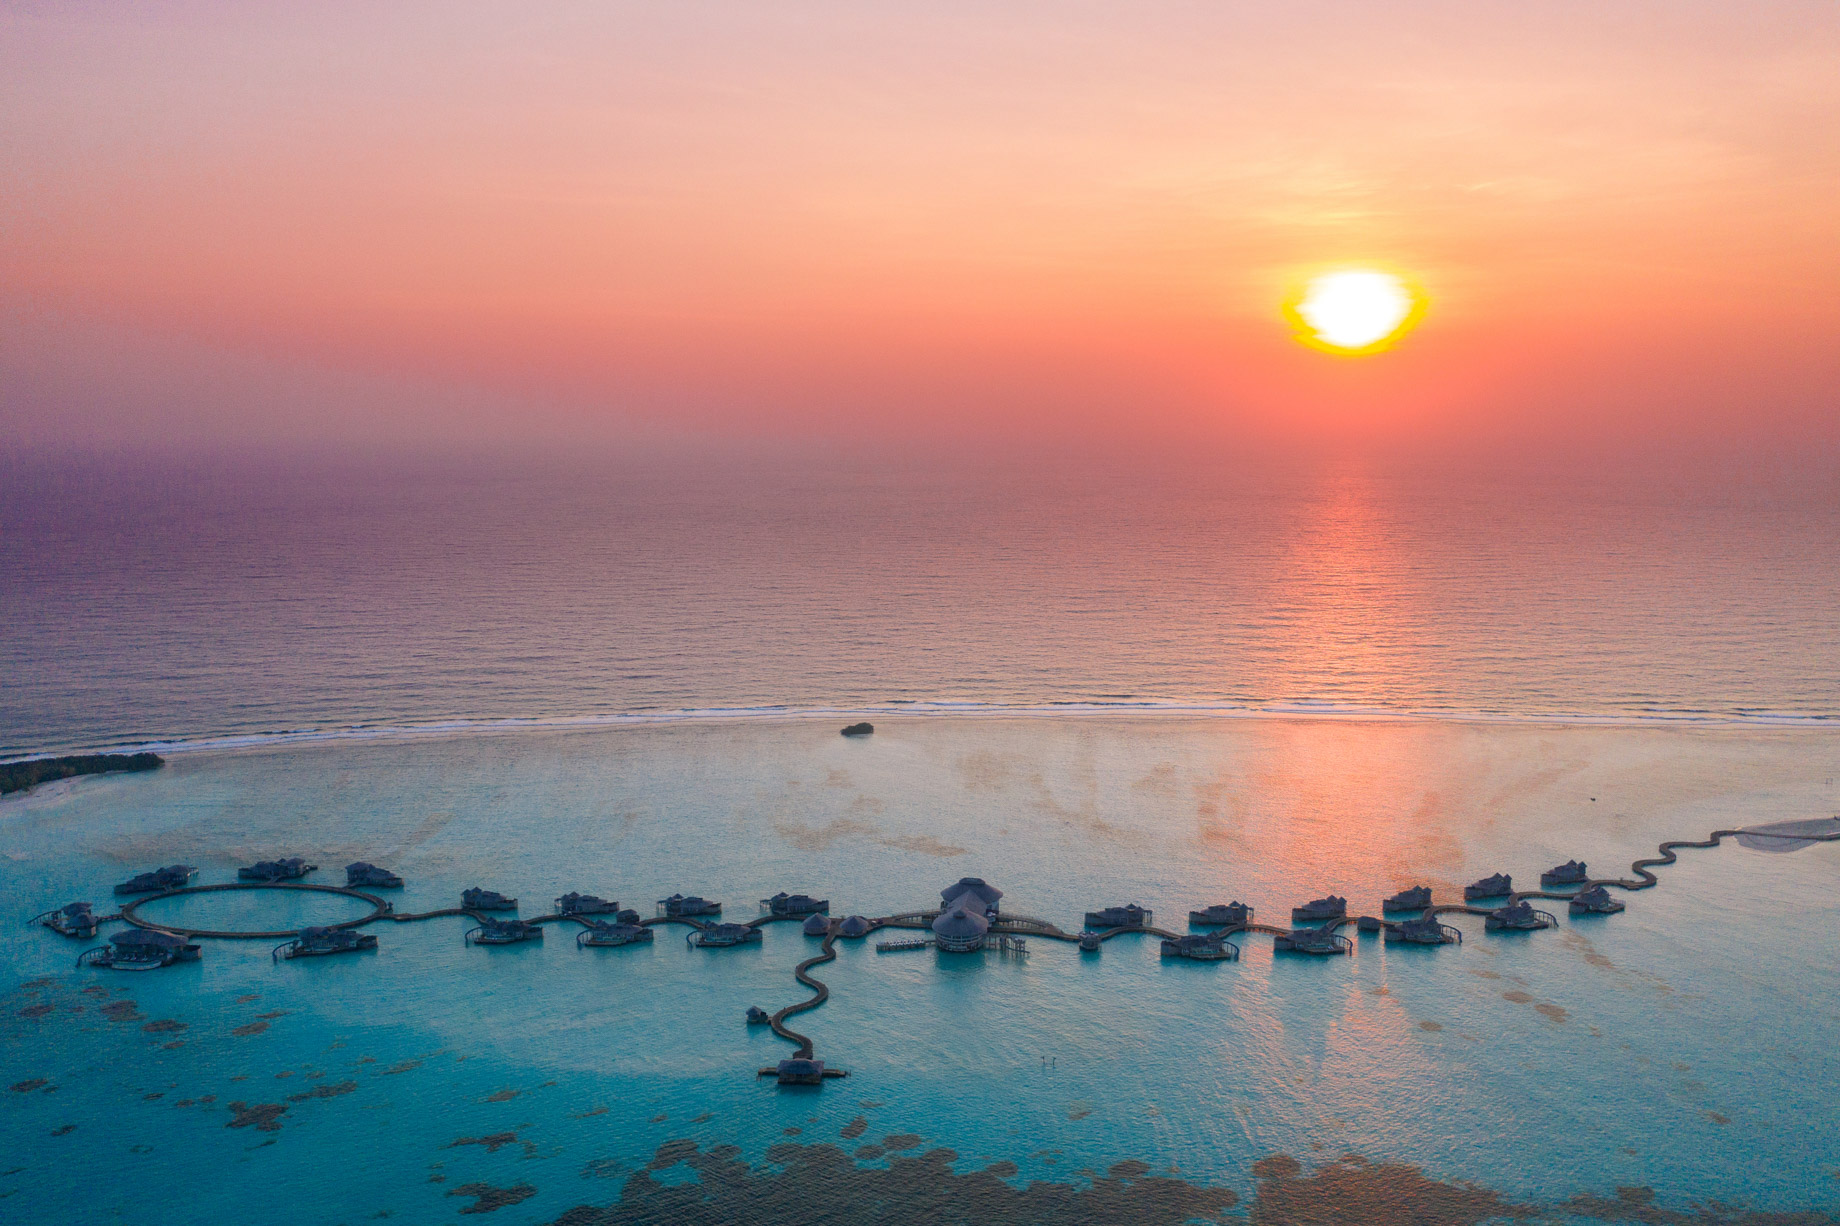 Soneva Jani Resort – Noonu Atoll, Medhufaru, Maldives – Resort Oceanview Sunset Aerial